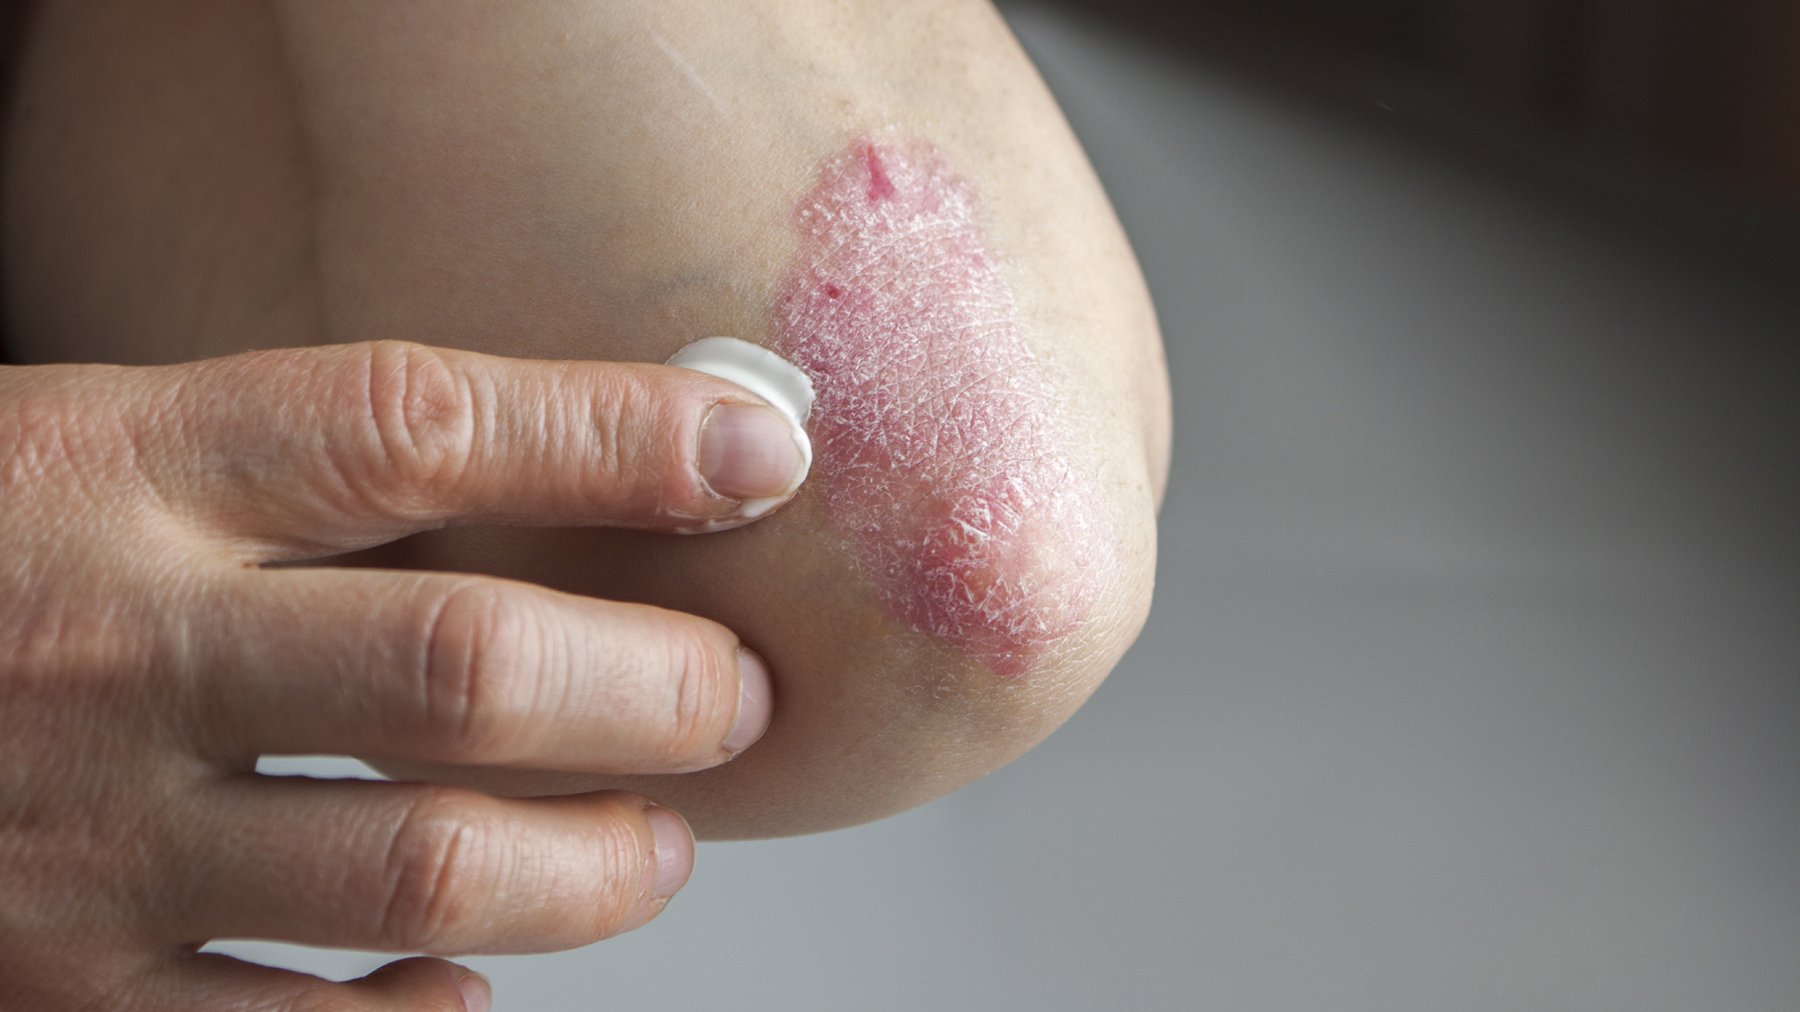 How the skin disease psoriasis costs us billions